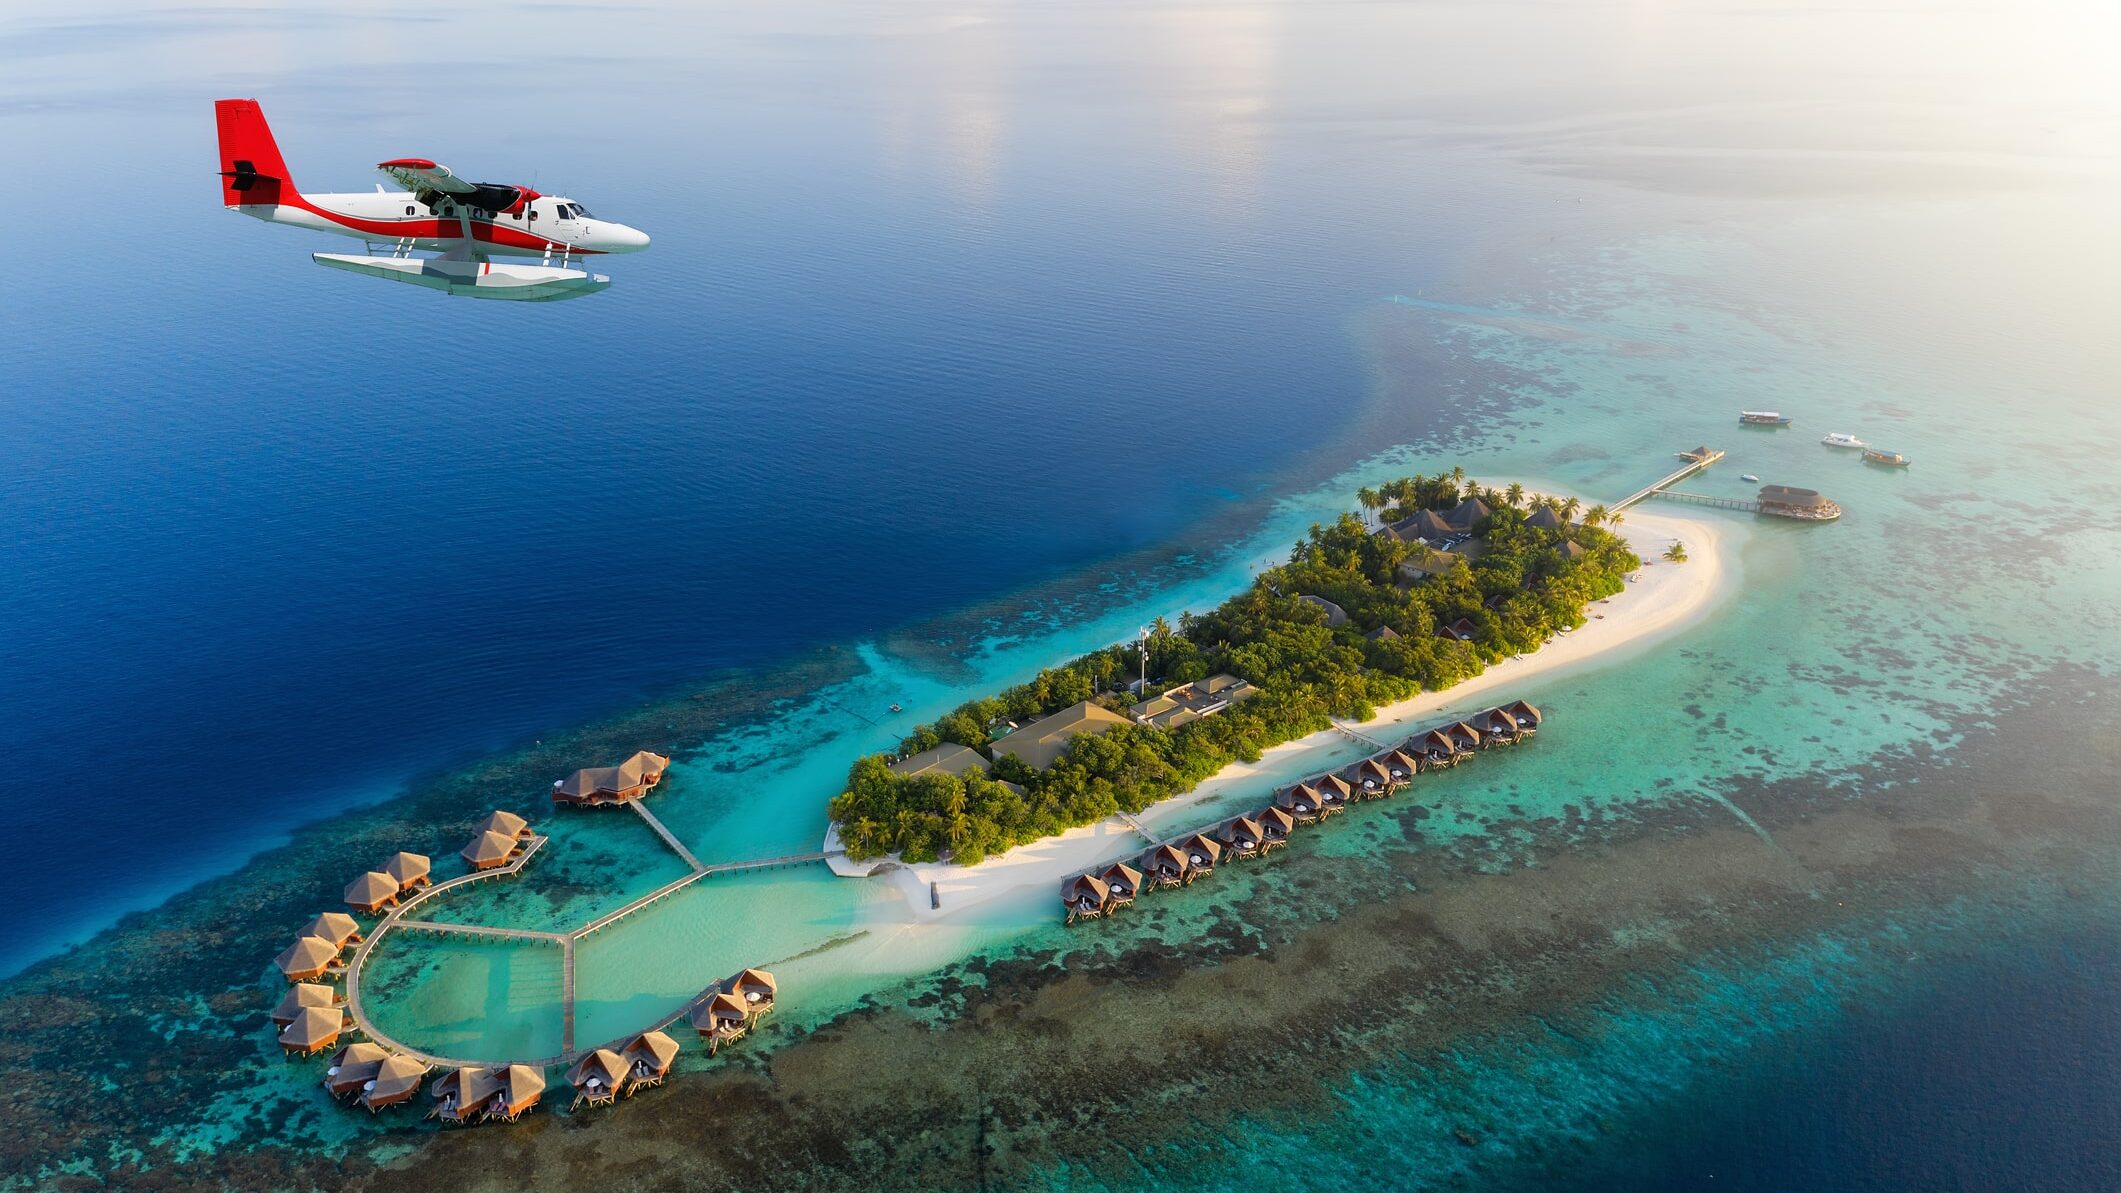 Seaplane flying over the maldives island